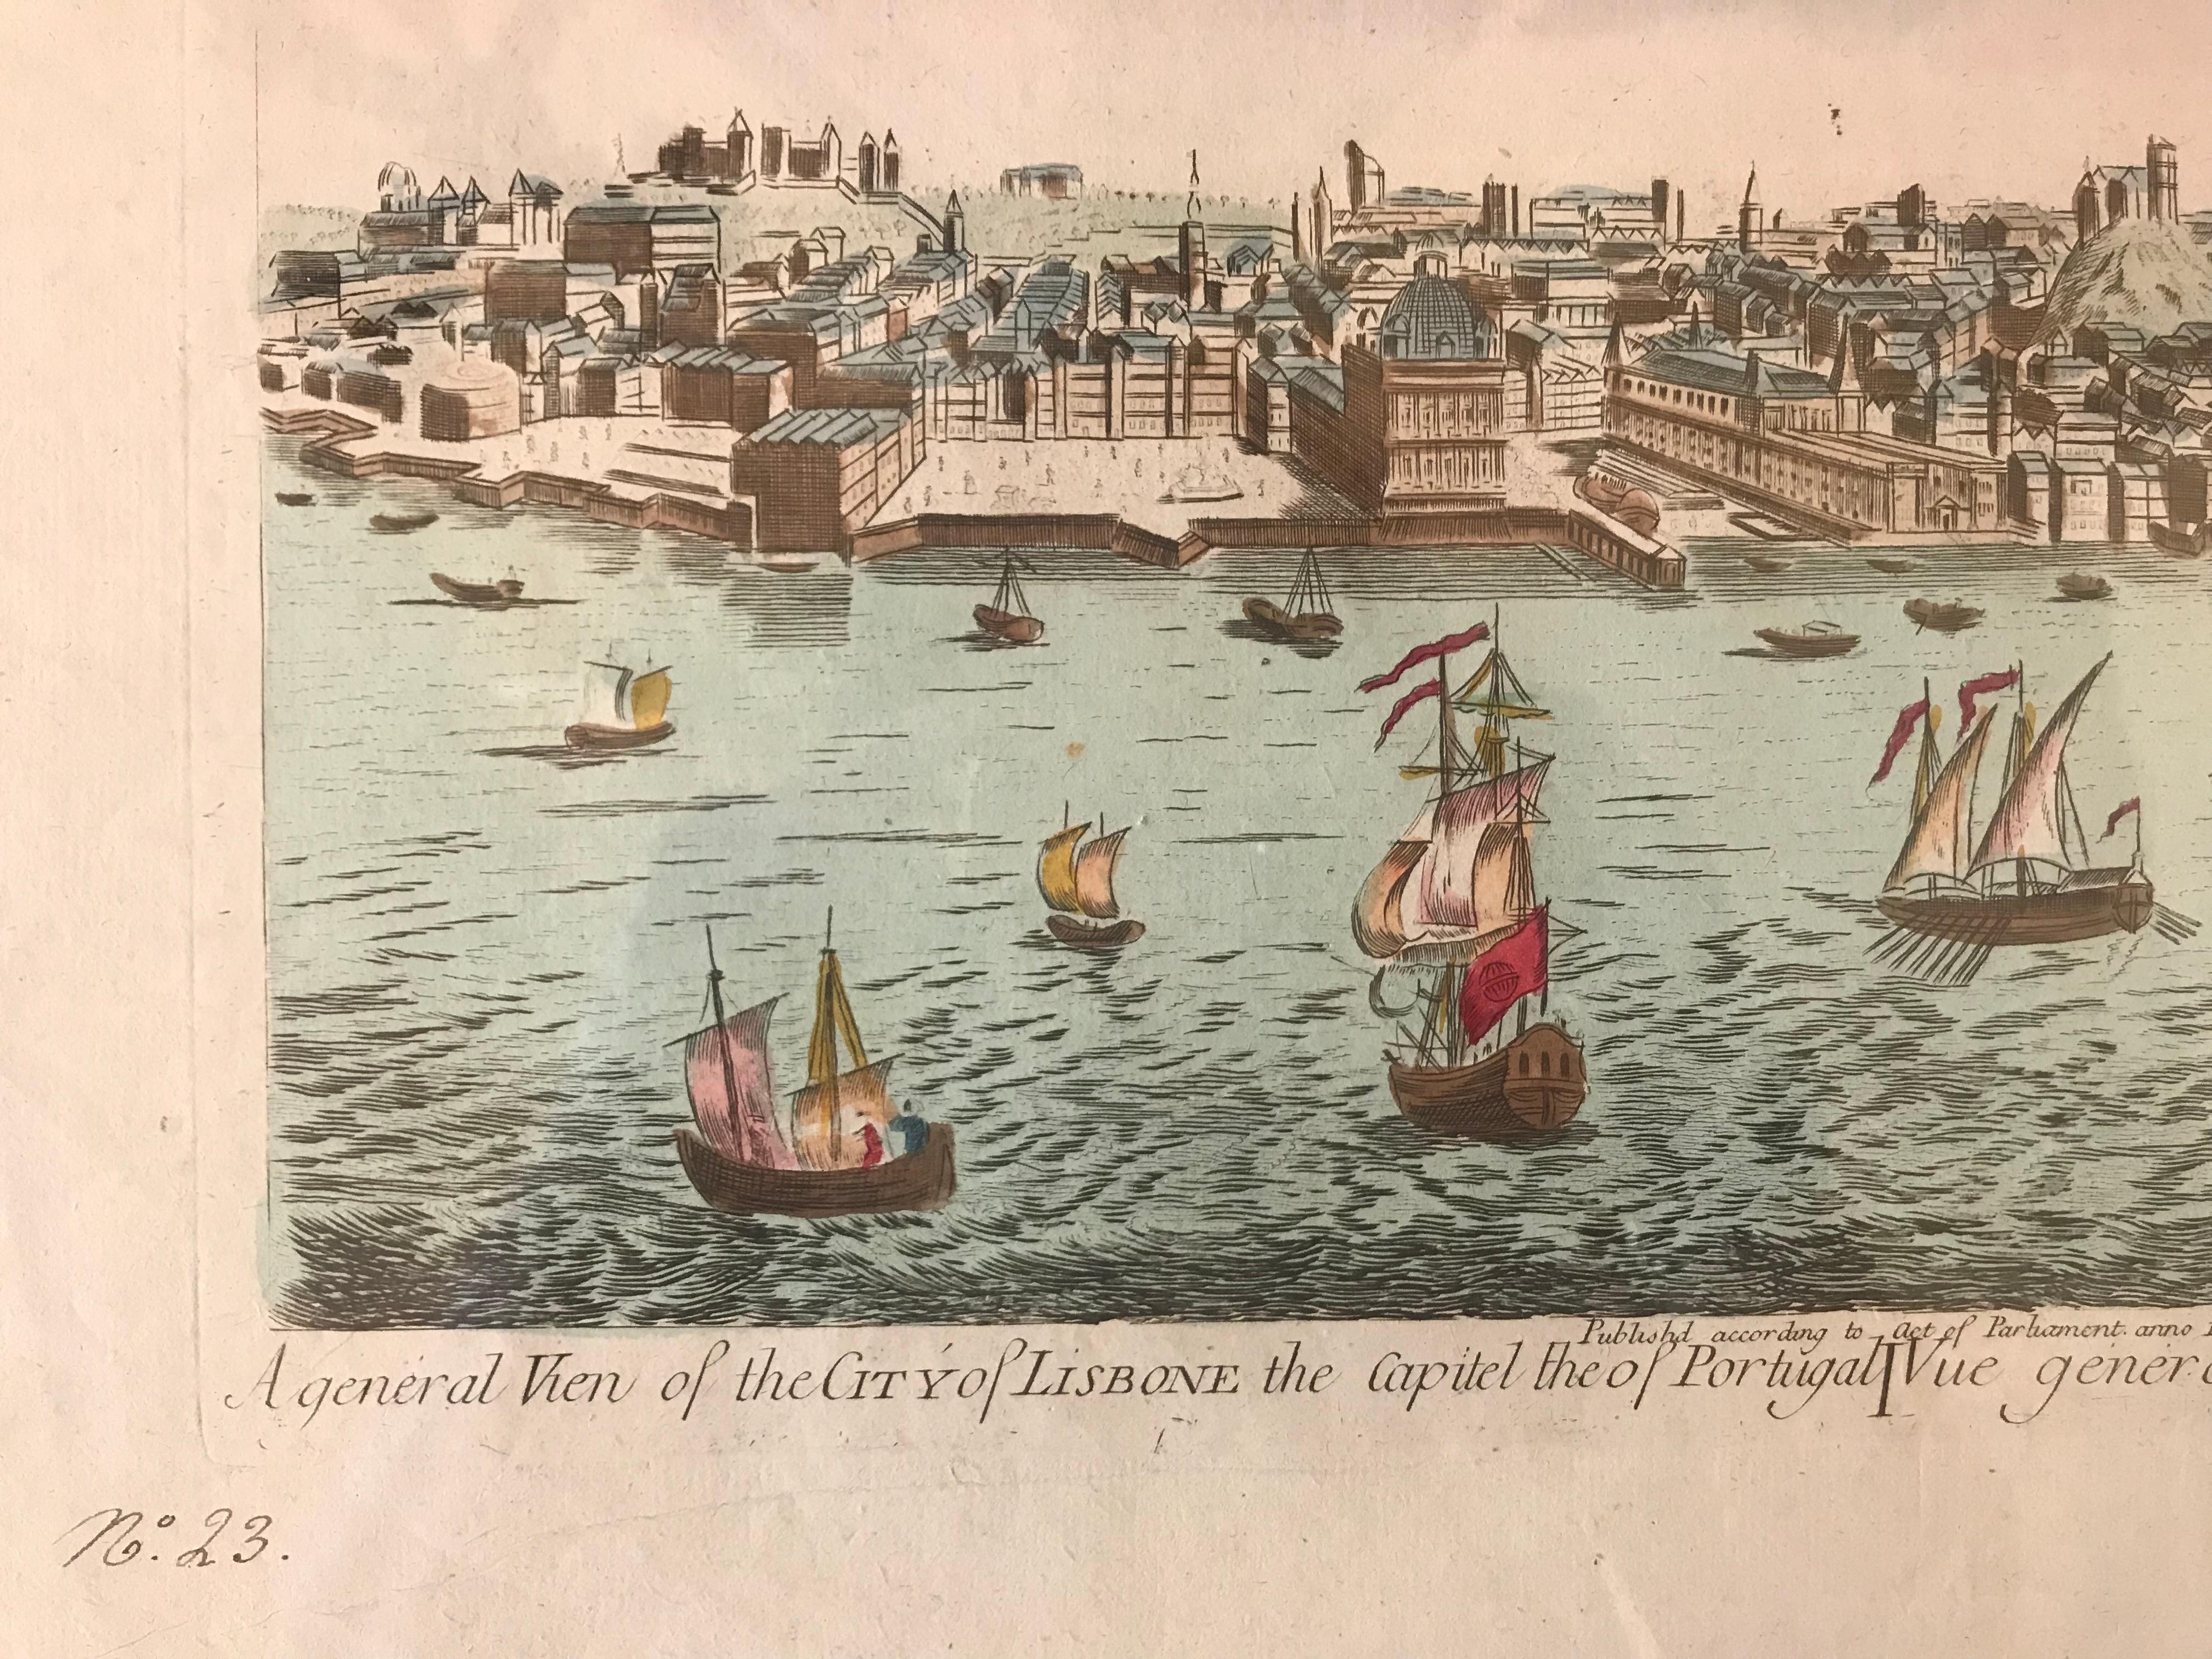 18th century Vue d’Optique hand-colored engraving of Lisbon.
Custom frame.

